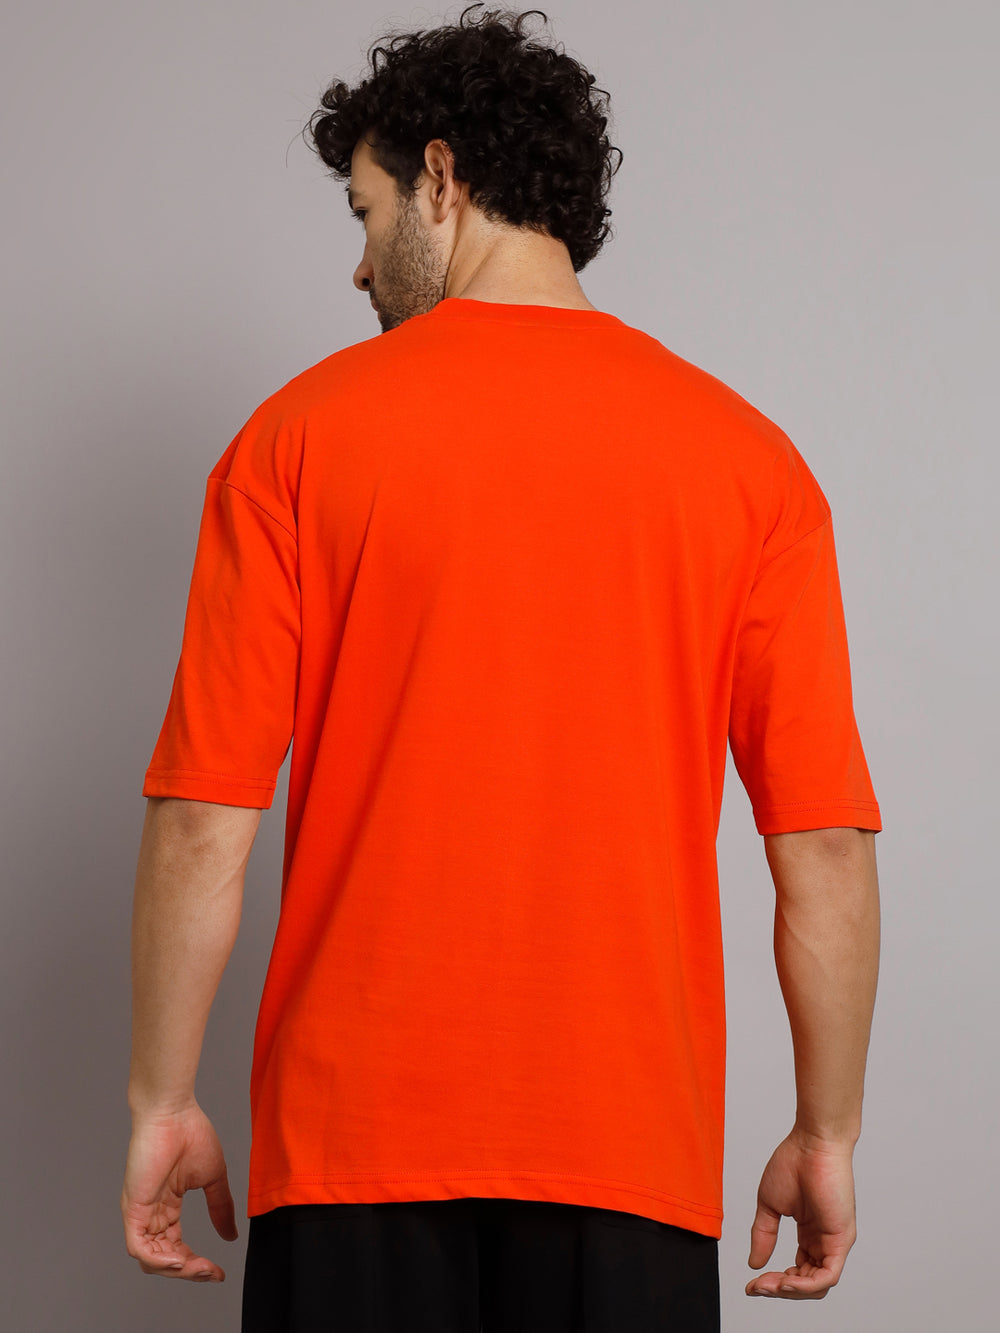 GRIFFEL Men Printed Neon Orange Regular fit T-shirt and Black Trackpant Set - griffel